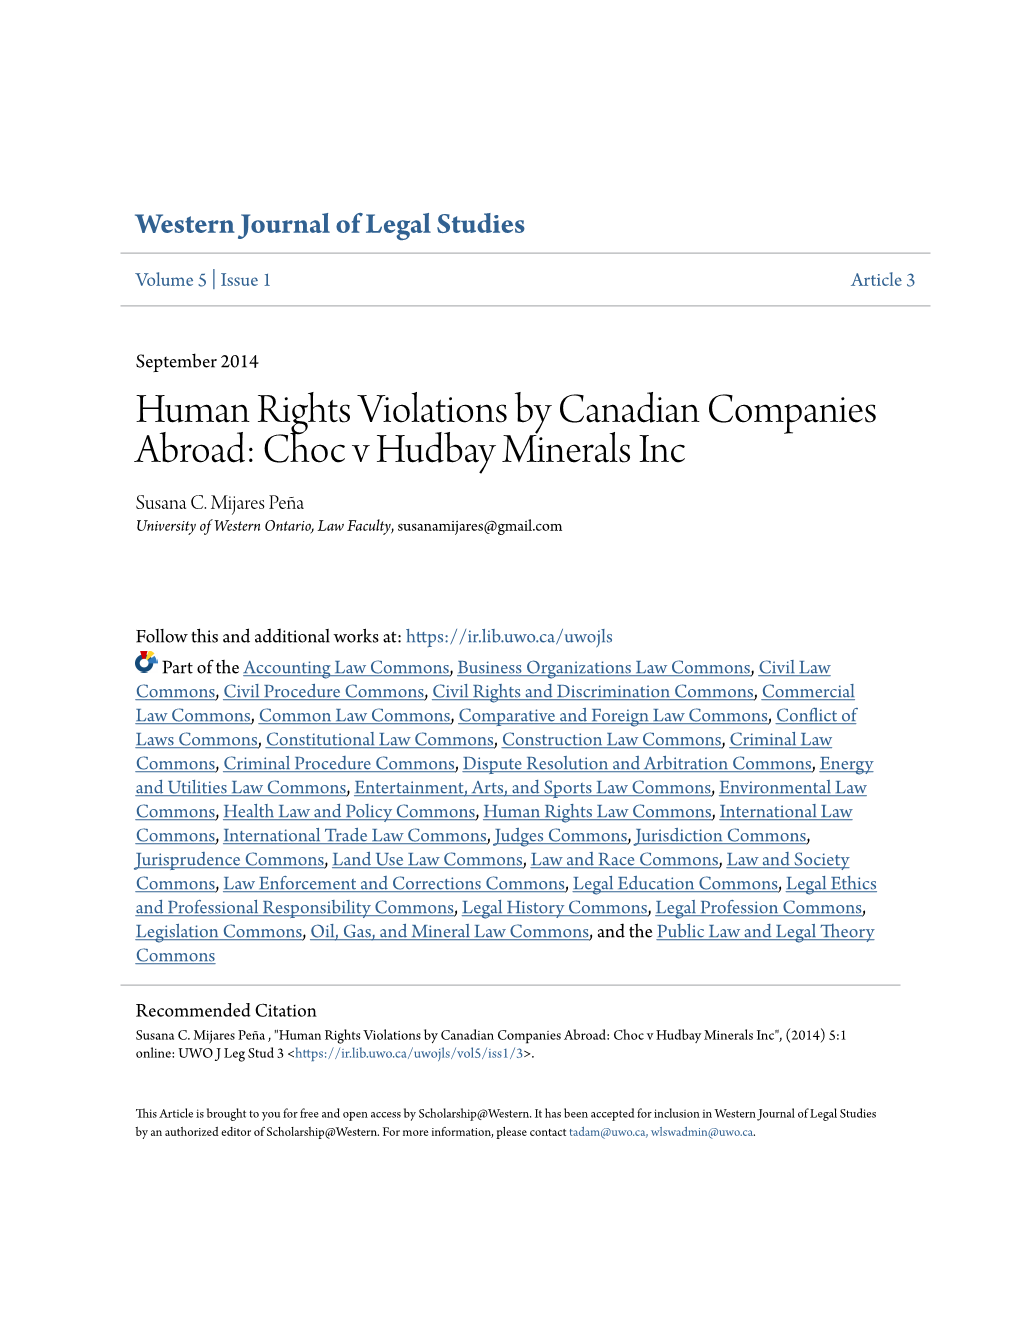 Human Rights Violations by Canadian Companies Abroad: Choc V Hudbay Minerals Inc Susana C